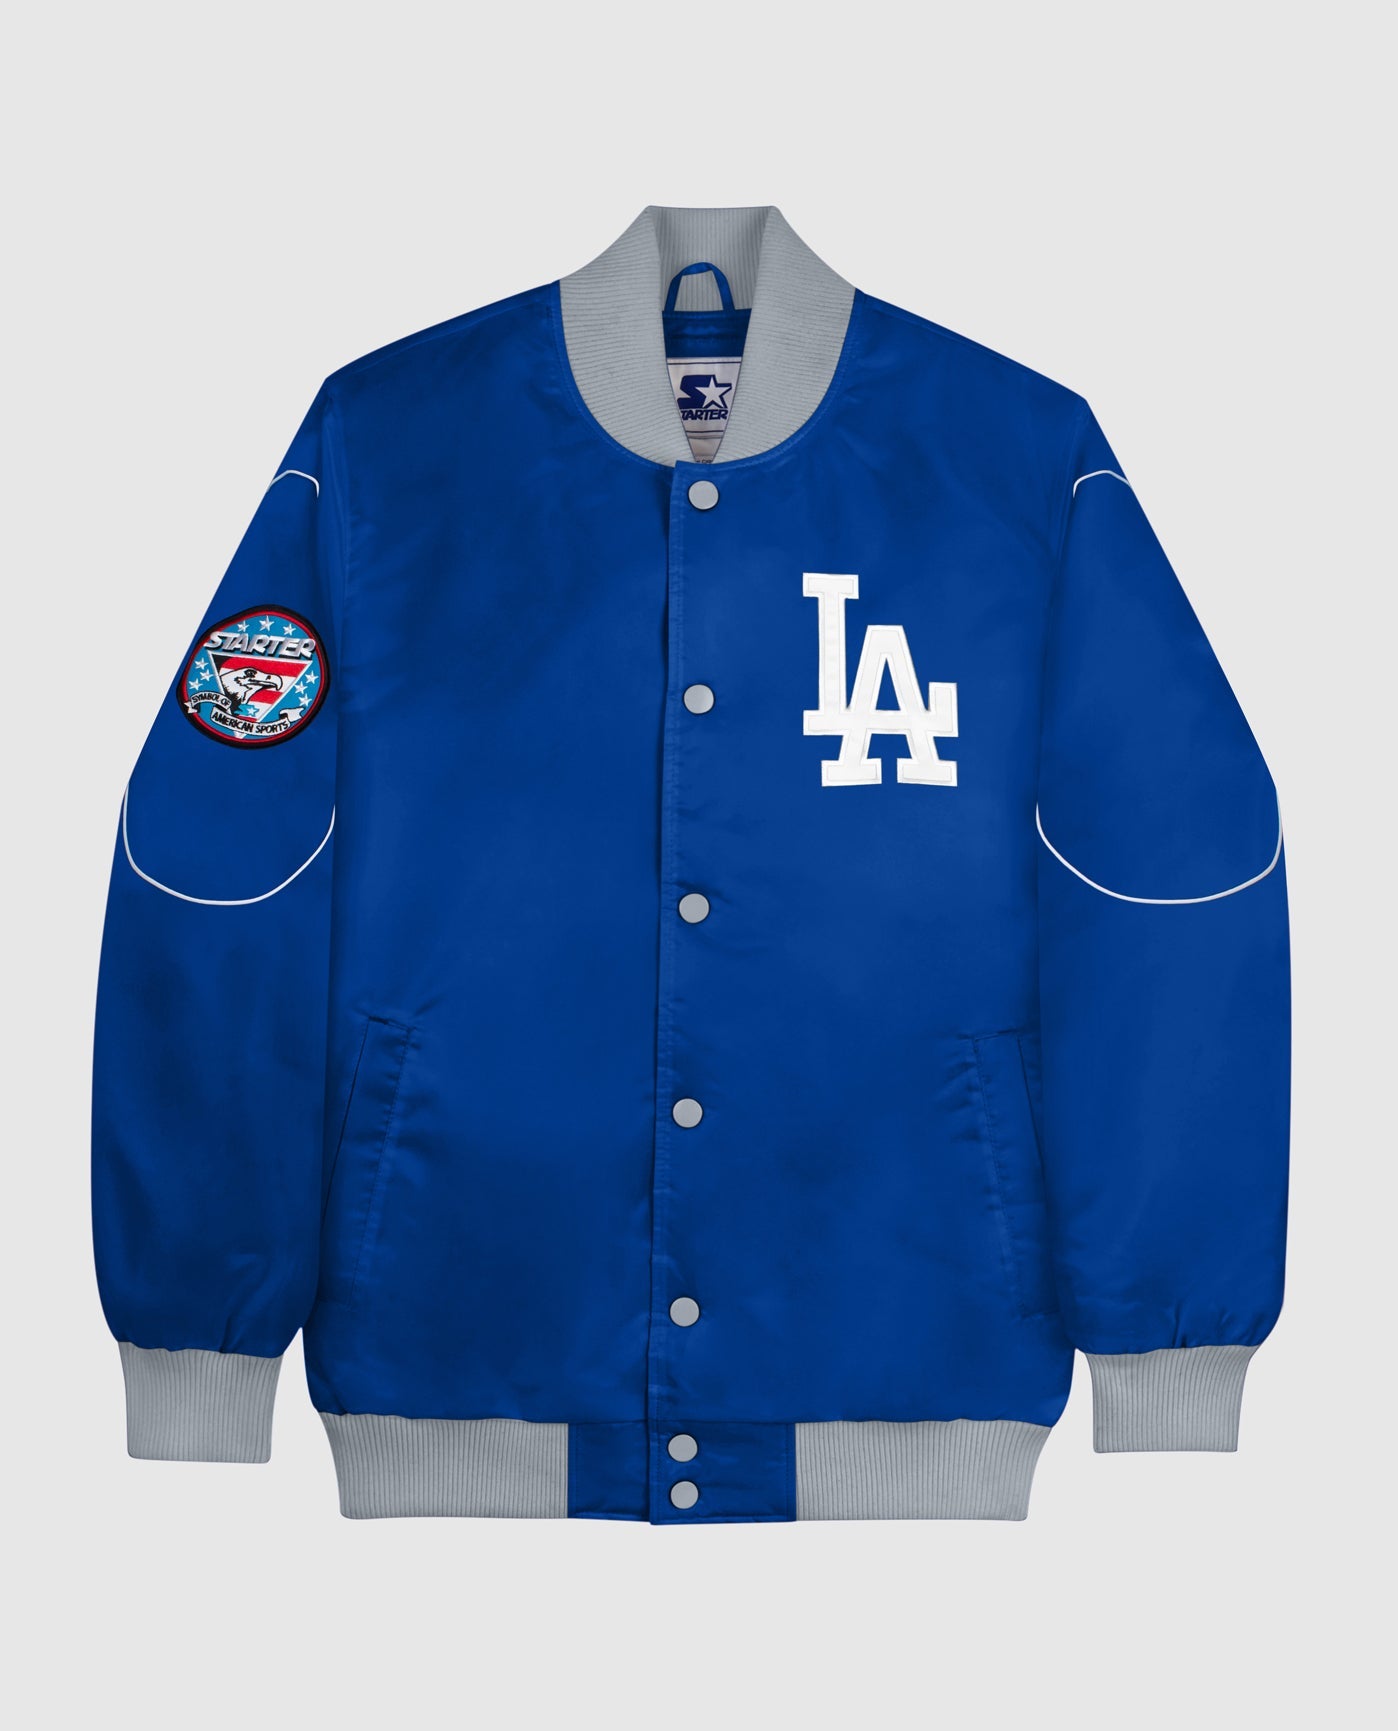 Grey and Blue Los Angeles Dodgers Varsity Jacket - HJacket